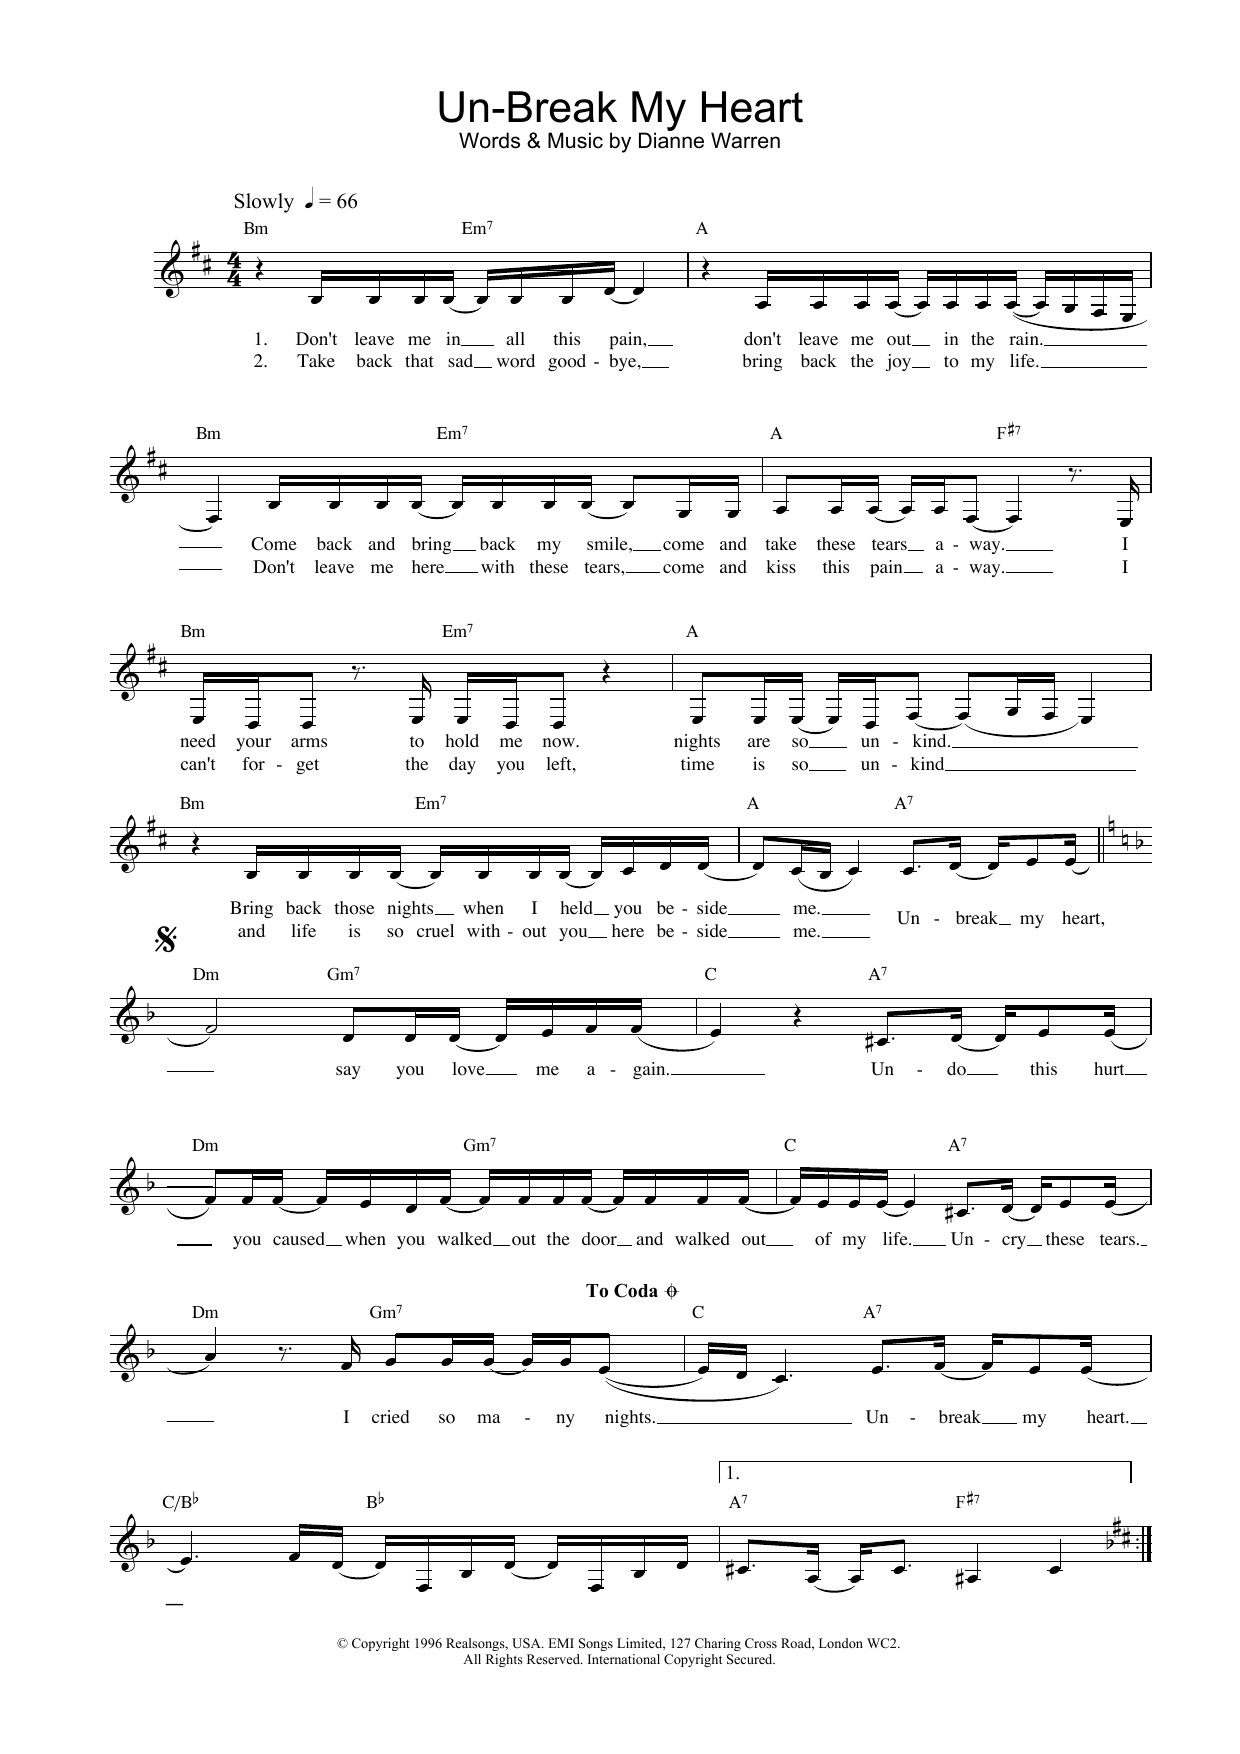 Toni Braxton Un-Break My Heart Sheet Music Notes & Chords for Melody Line, Lyrics & Chords - Download or Print PDF